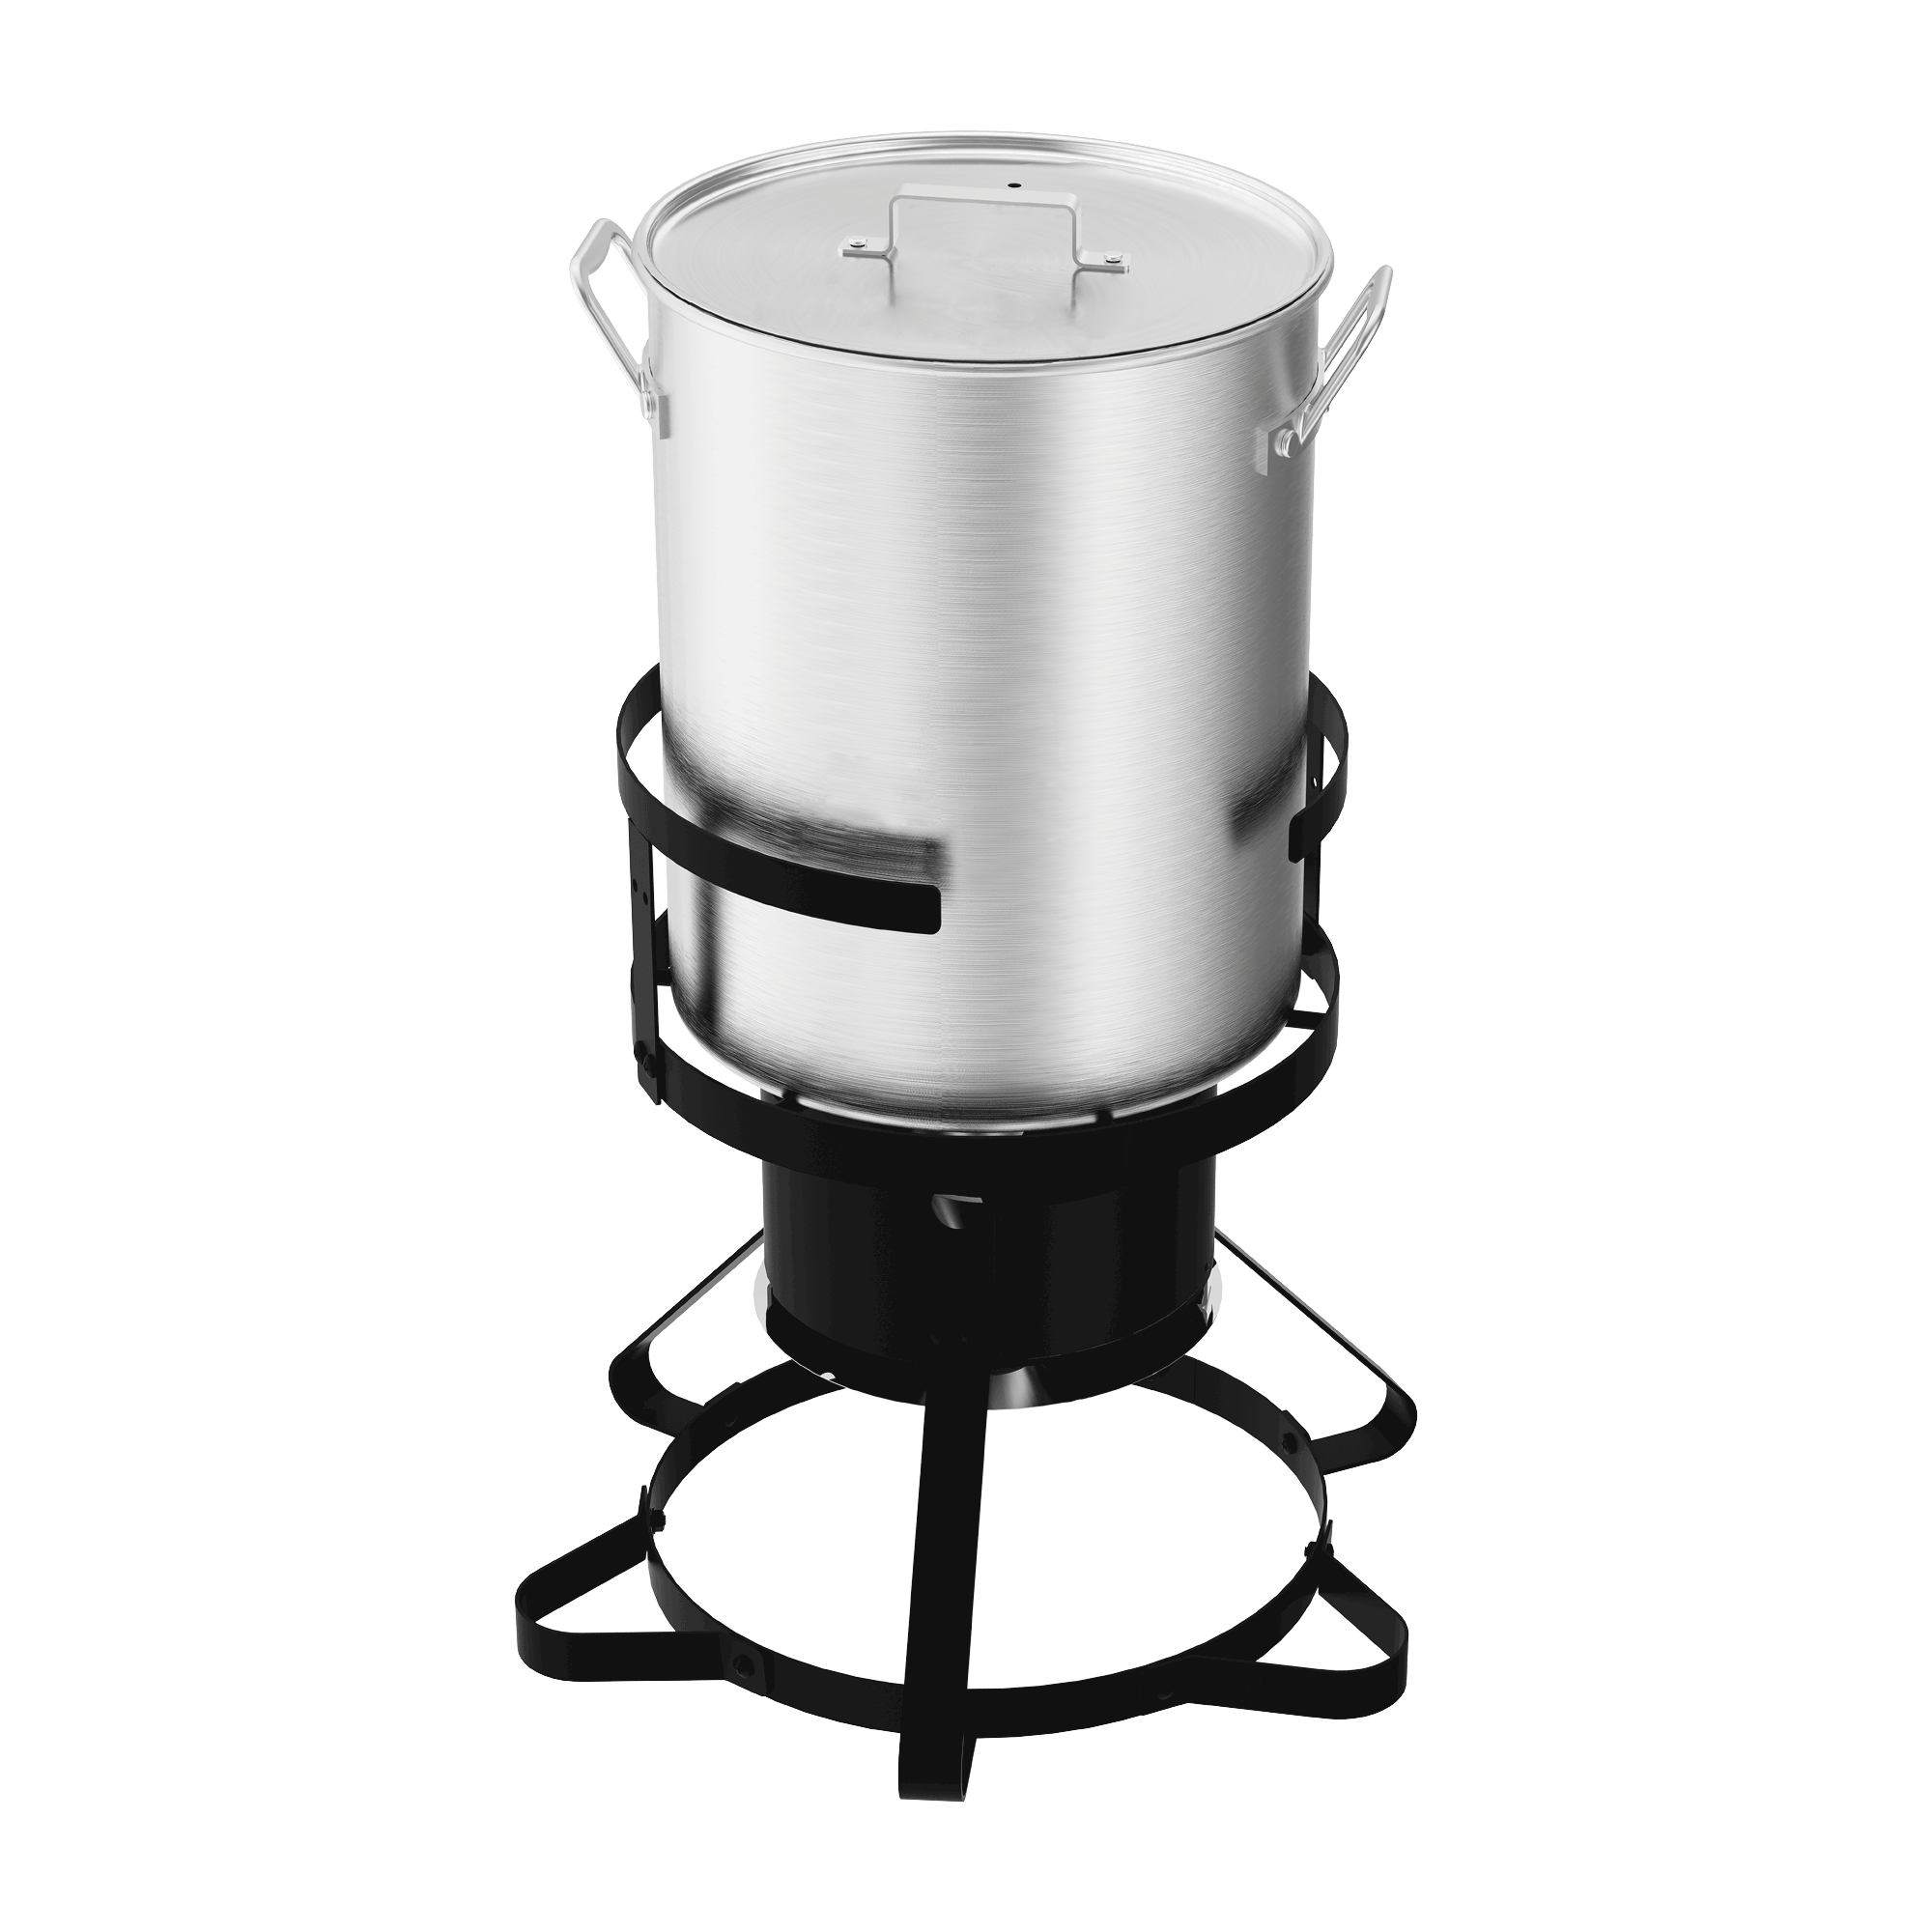 Turkey Cooker, 30 Qt., Aluminum Pot with Stand